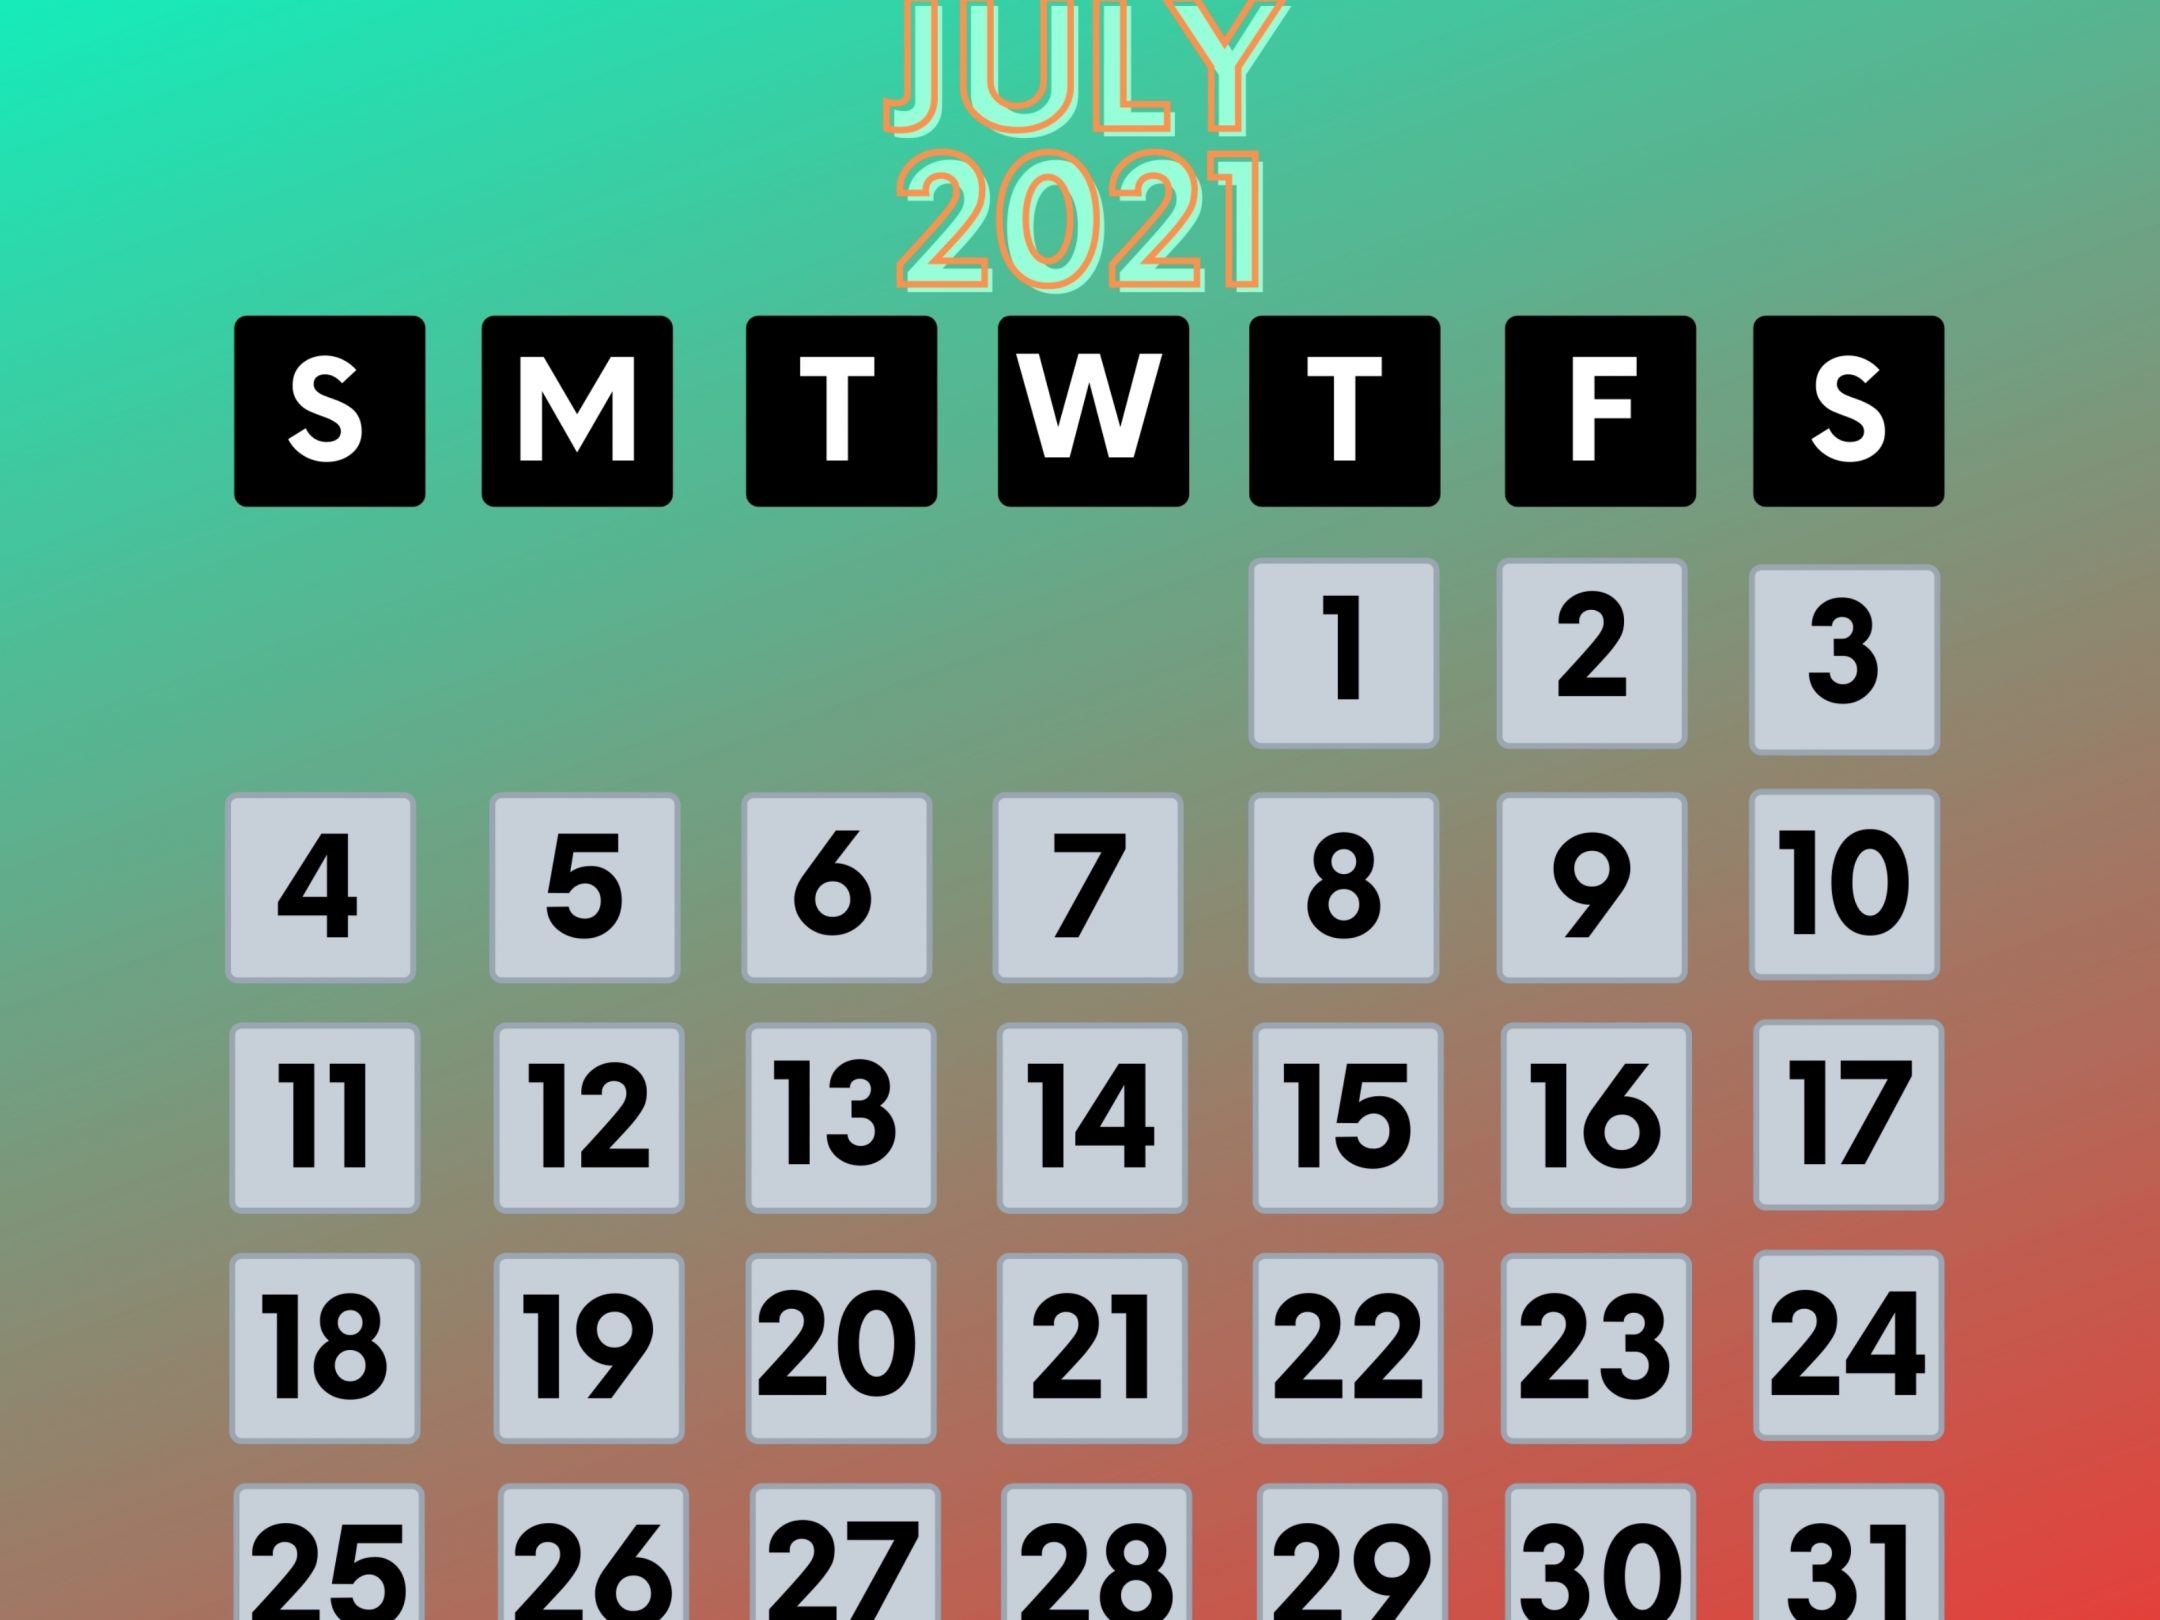 2160x1620 iPad wallpaper 4k July 2021 Calendar iPad Wallpaper 2160x1620 pixels resolution